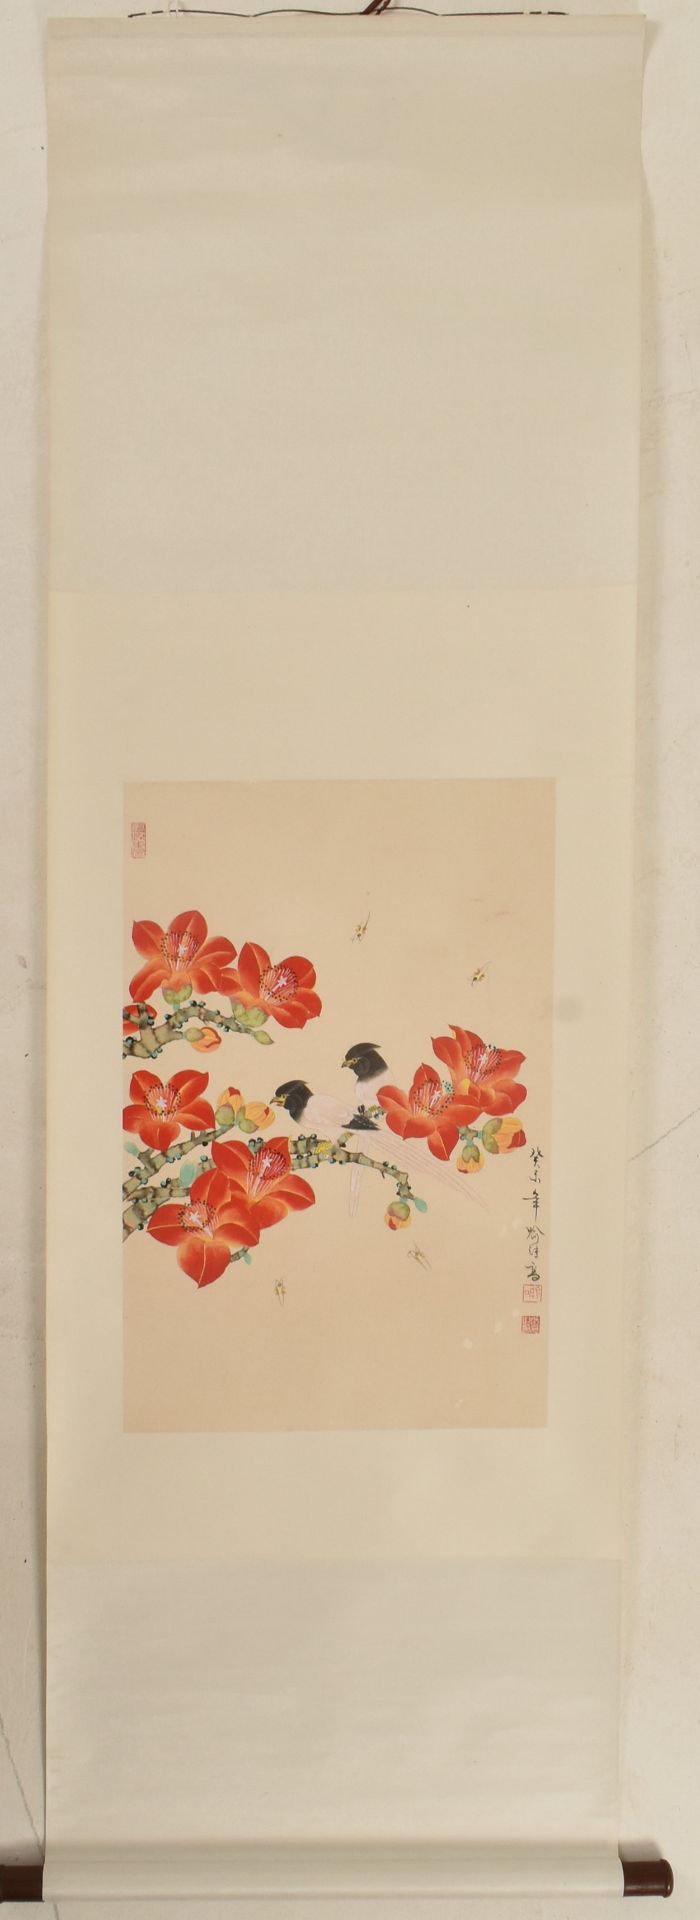 YU ZHIGAO 喻继高 - FLOWERS AND BIRDS 花鸟 - Image 6 of 6